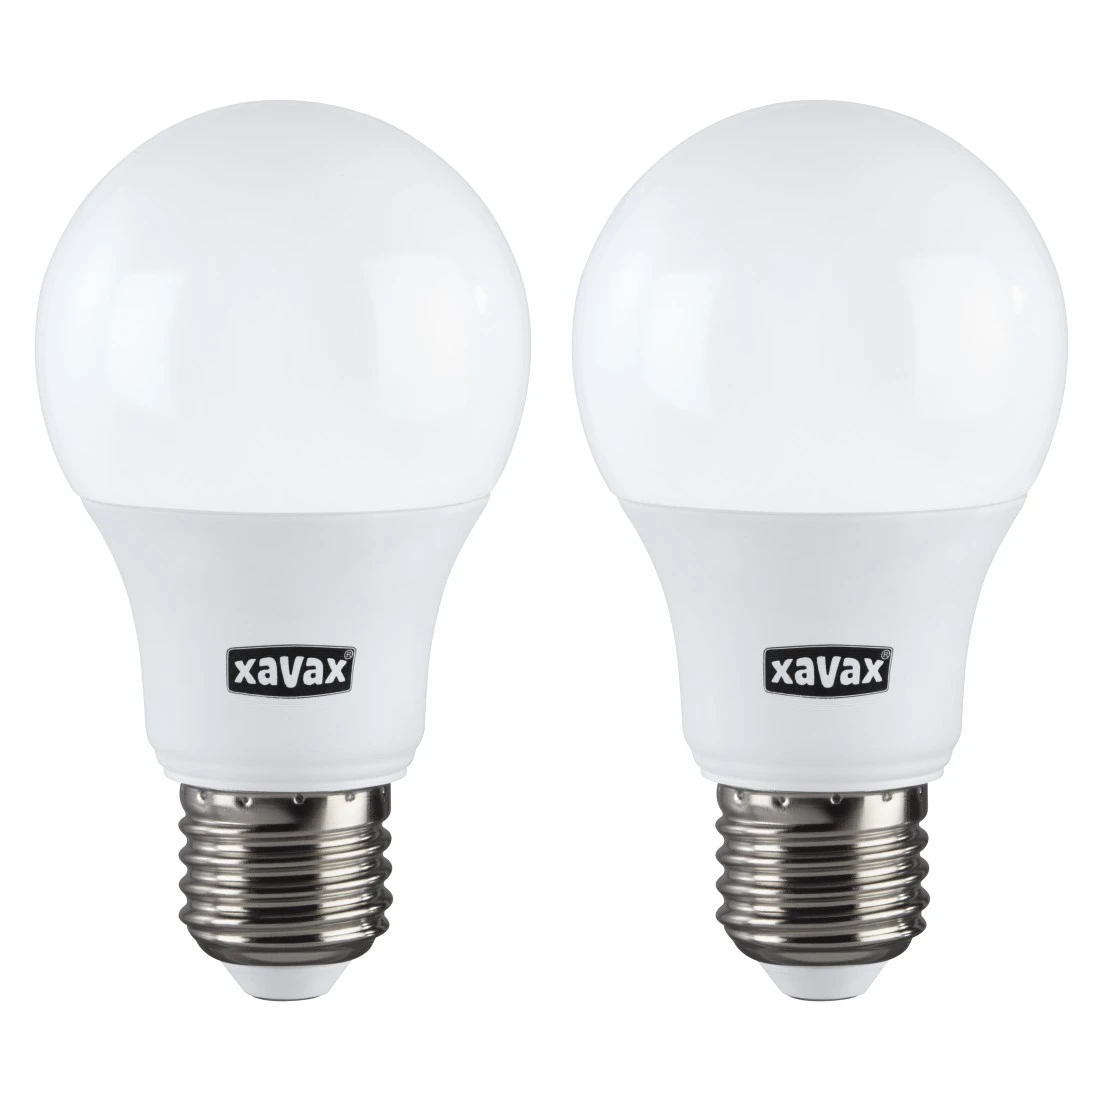 abx Druckfähige Abbildung - Xavax, LED-Lampe, E27, 806lm ersetzt 60W, Glühlampe, Warmweiß, 2 Stück